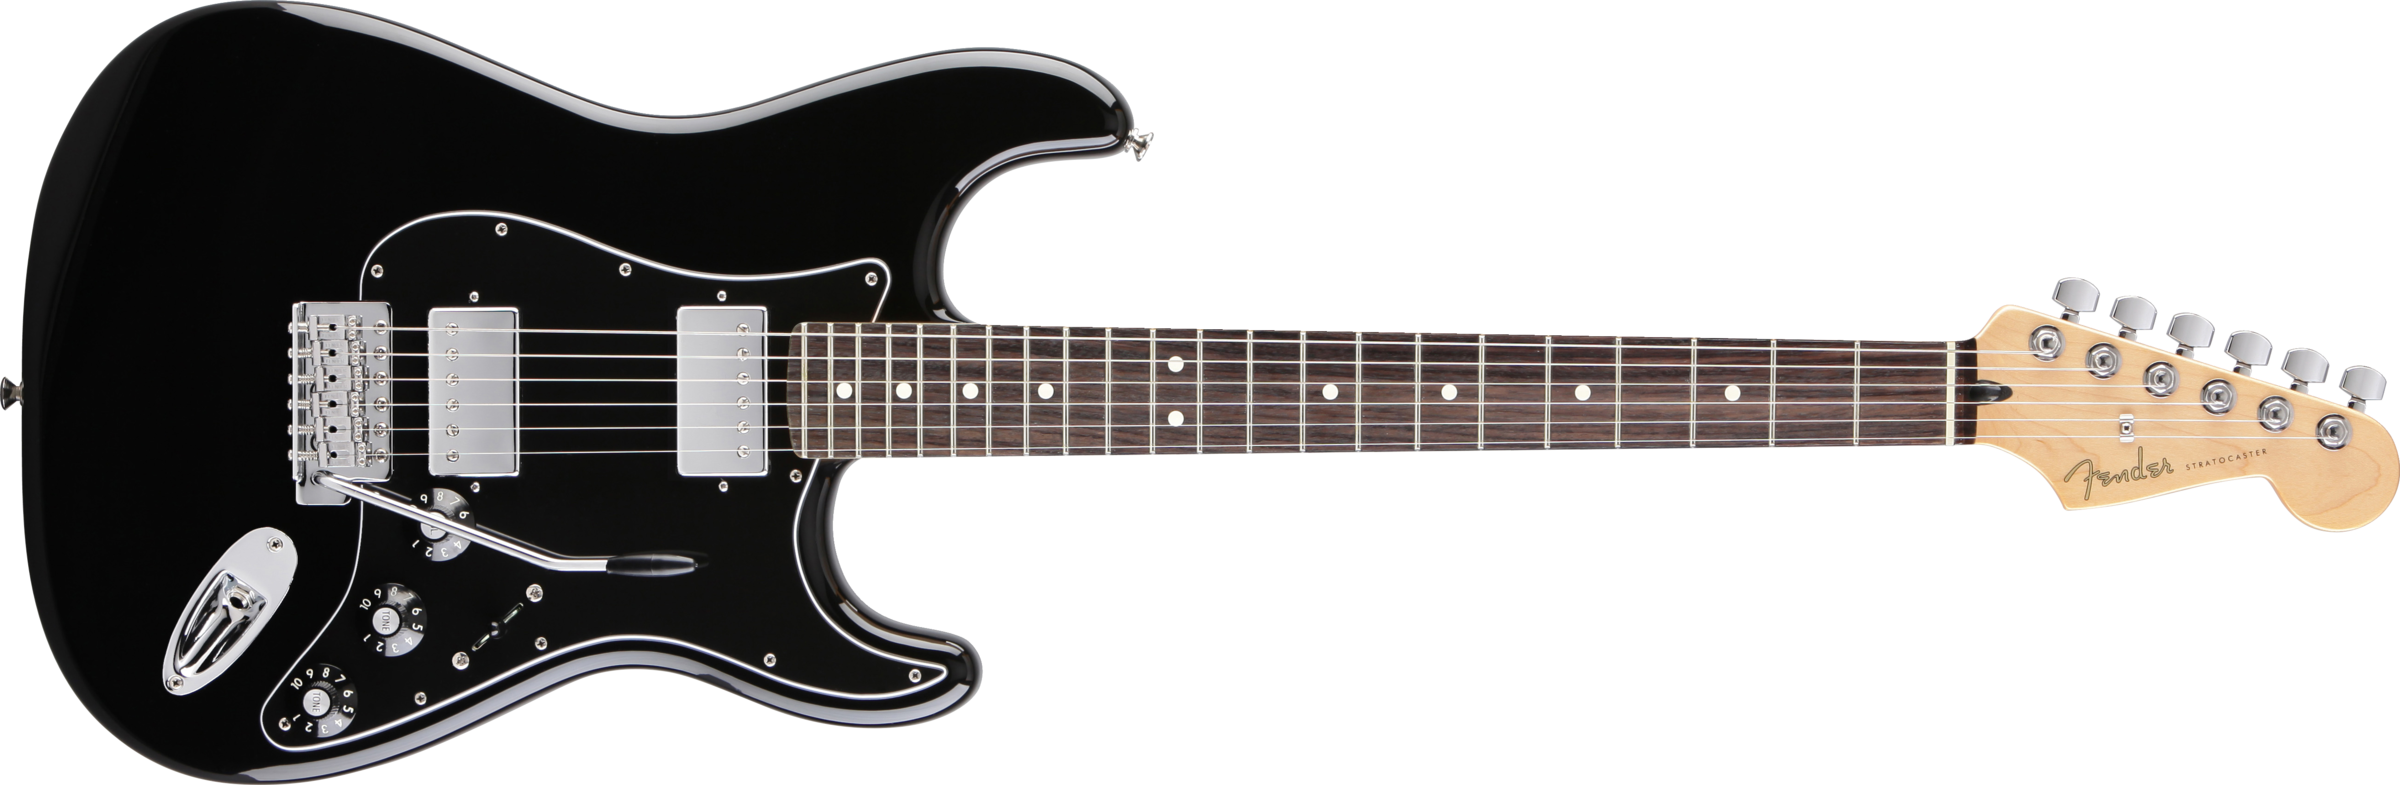 Fender Blacktop Stratocaster HH image (#1248443) - Audiofanzine